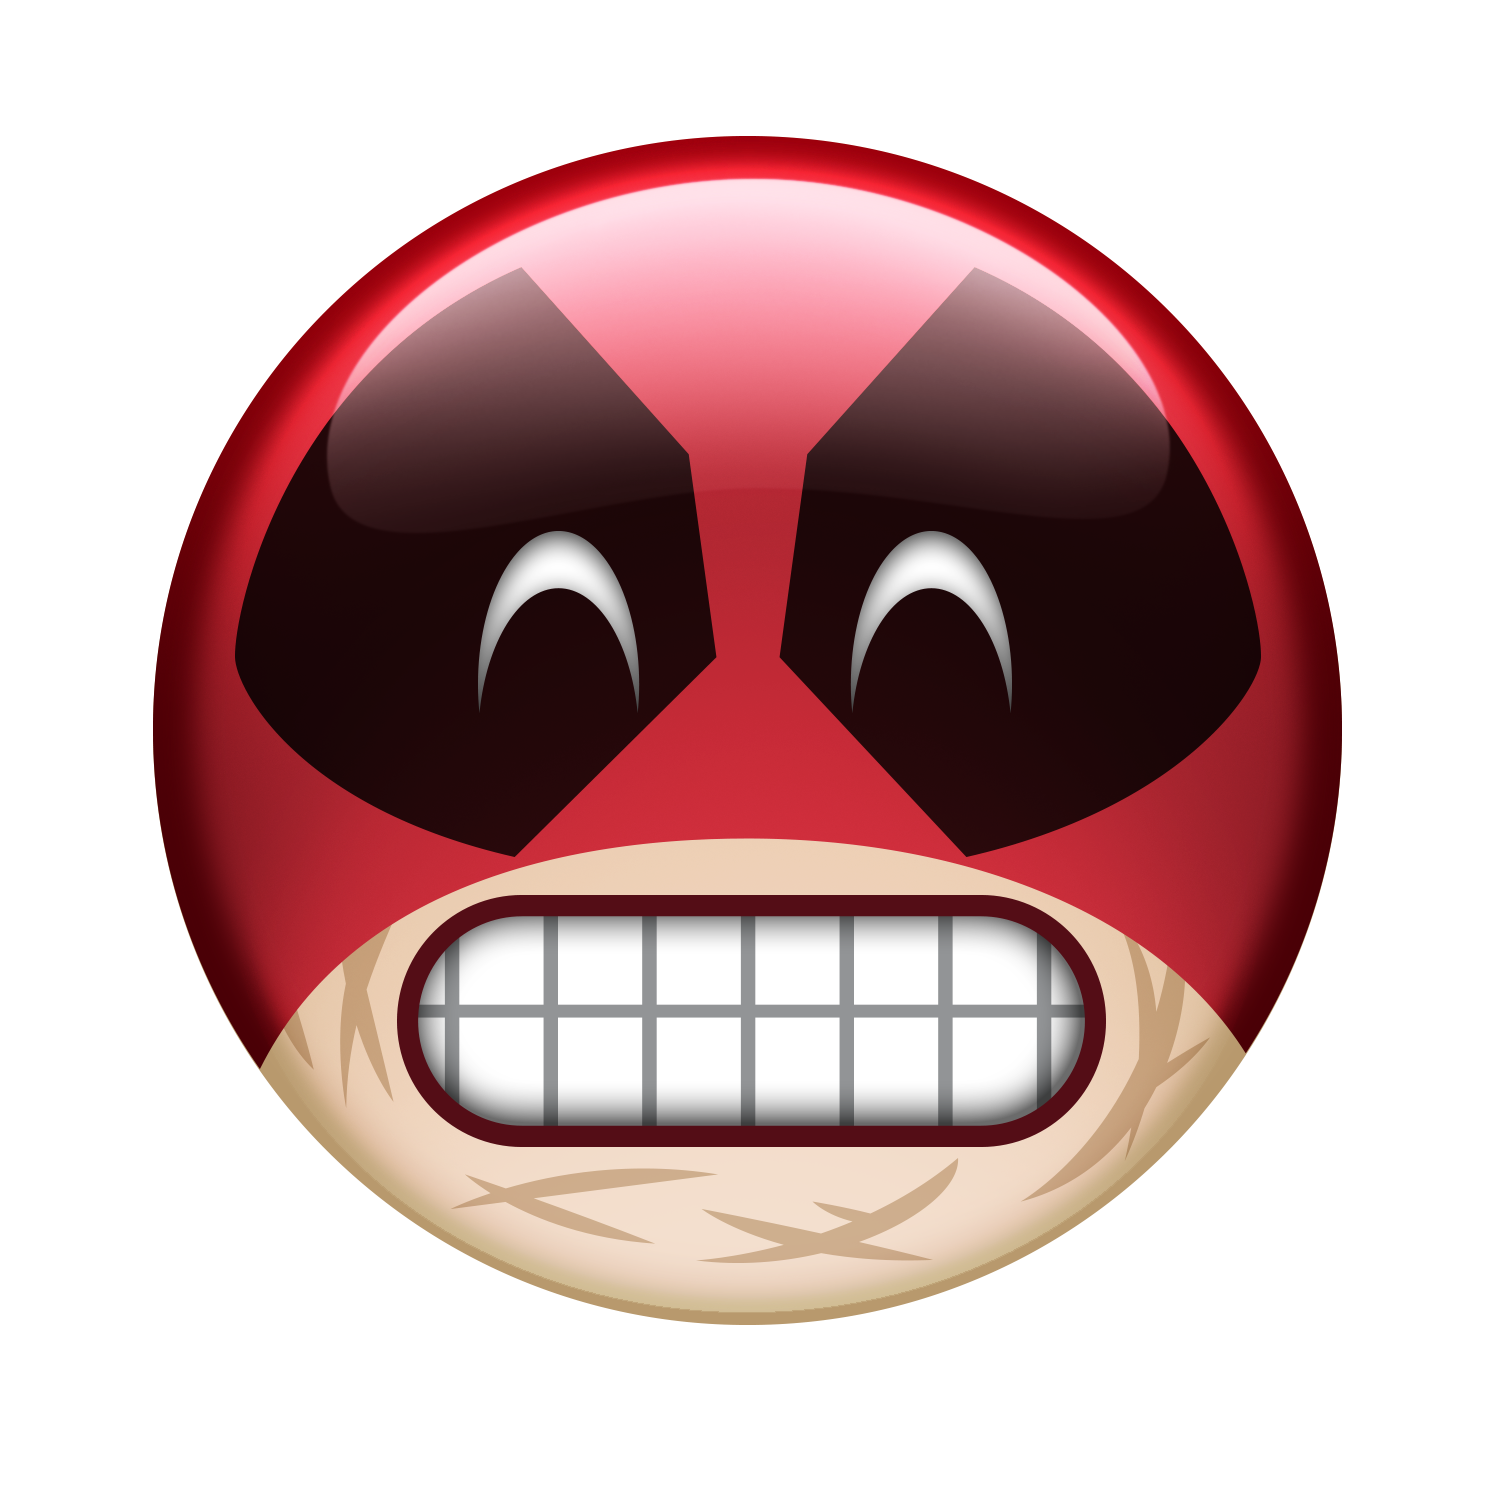 Smile Deadpool Mouth Film Emoji HD Image Free PNG PNG Image